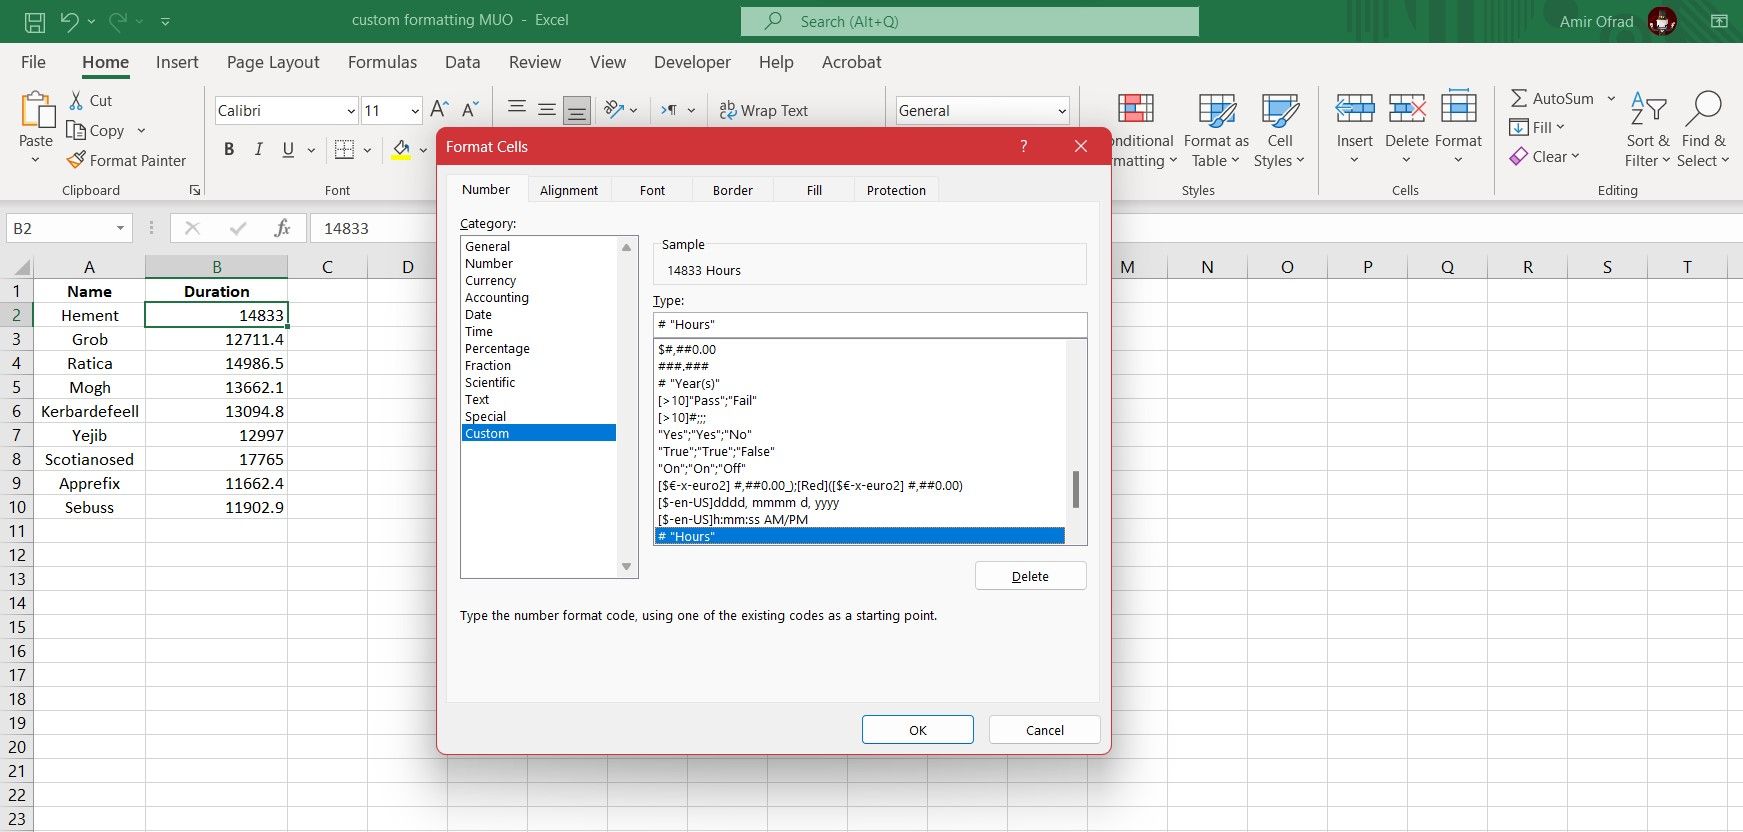 Formatting window in Excel